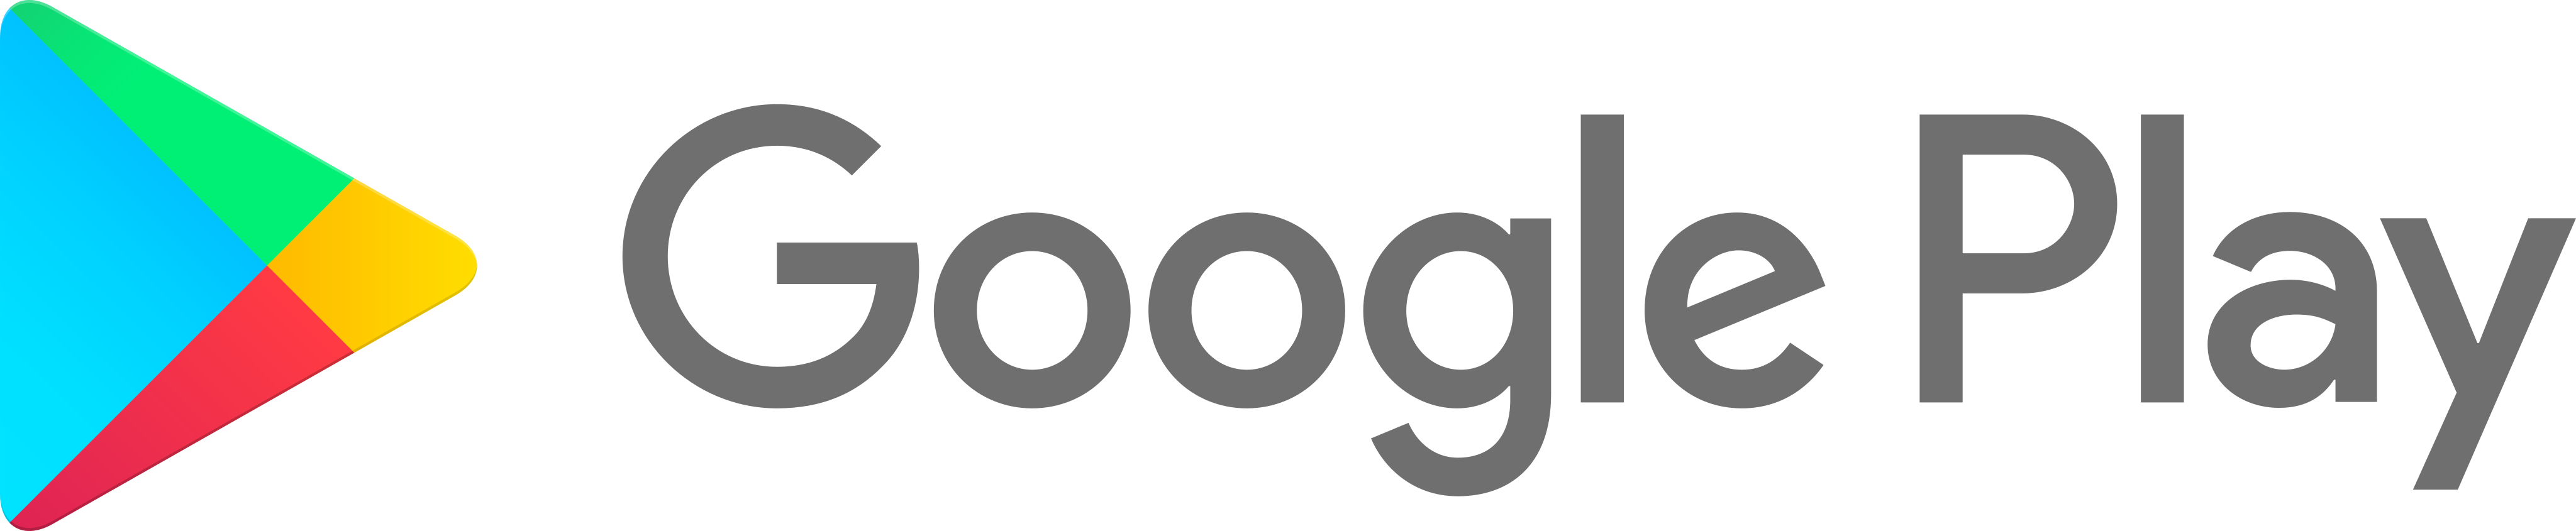 Google Play Logo   Png And Vector   Logo Download - Google Play, Transparent background PNG HD thumbnail